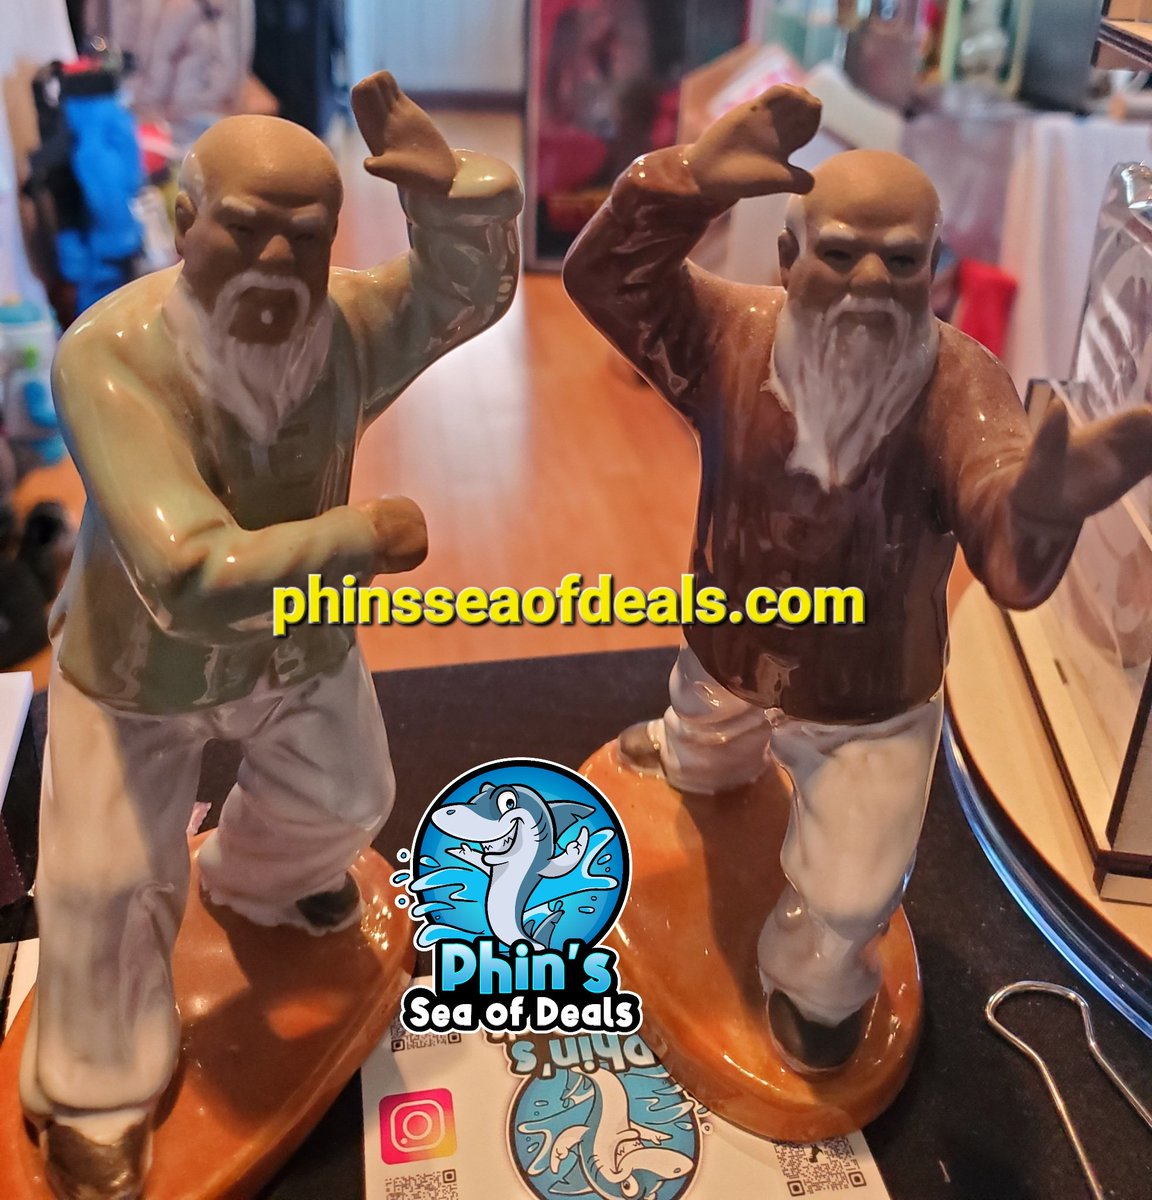 6 Chinese oriental  porcelain  figures doing Tai Chi

Phinsseaofdeals.com 

#Phinsseaofdeals #taichi #chinesetaichi #kungfu #oriental #orientalfigurines #kungfumaster #porcelain #porcelainfigurine #washingtoncountypa #washingtonpa #mcmurraypa #thriftstore #resellercommunity